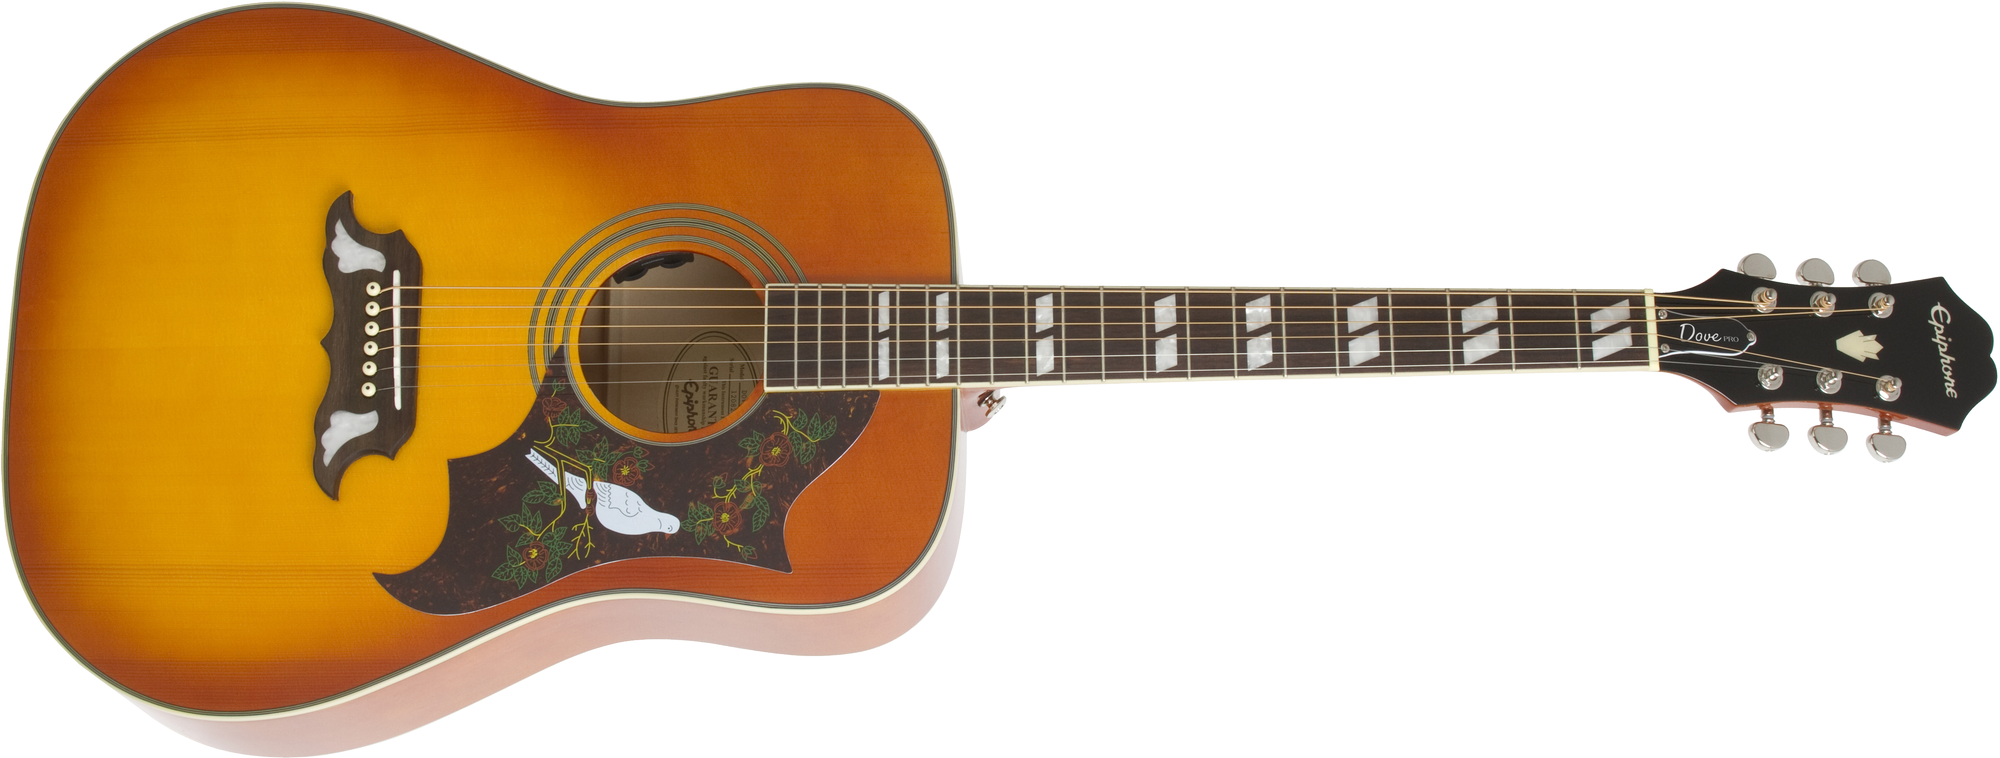 8: Epiphone Dove Studio Western Guitar (Violinburst)